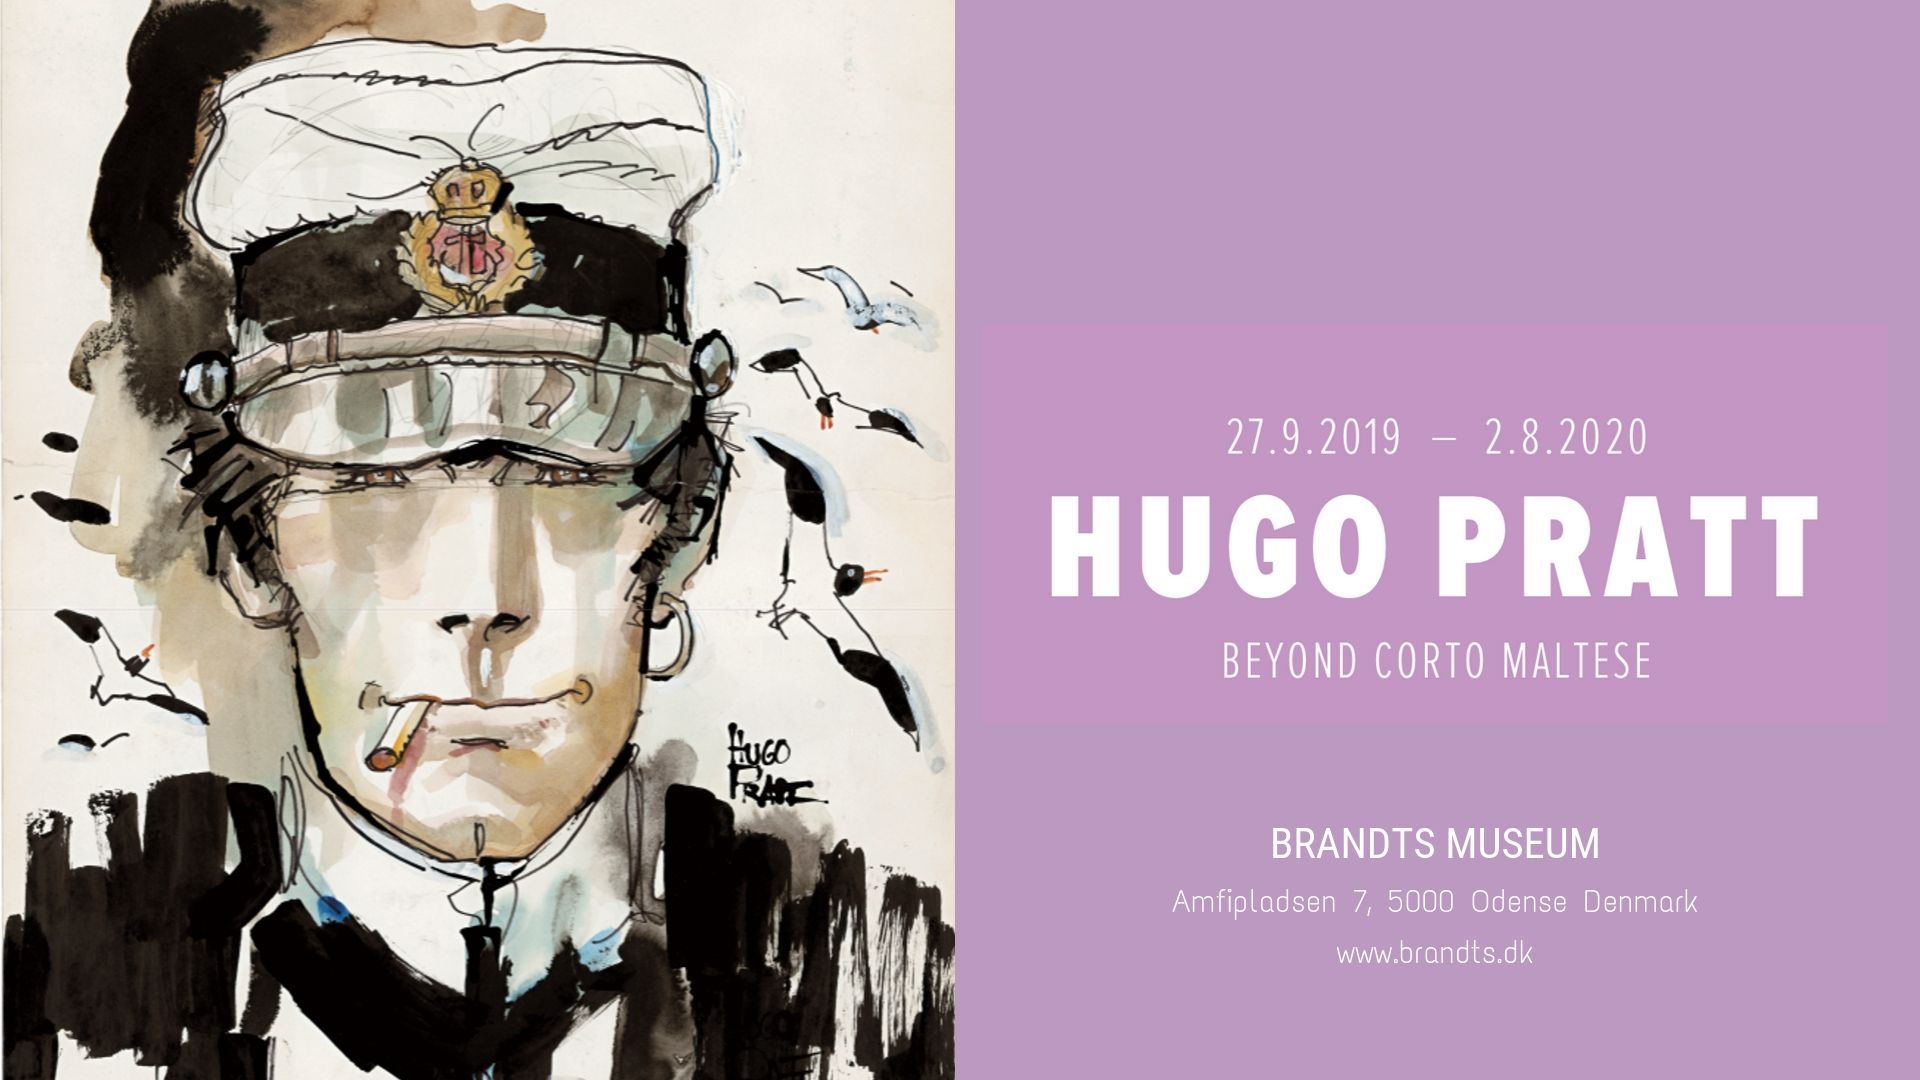 Exhibit Hugo Pratt beyond Corto Maltese in Denmark